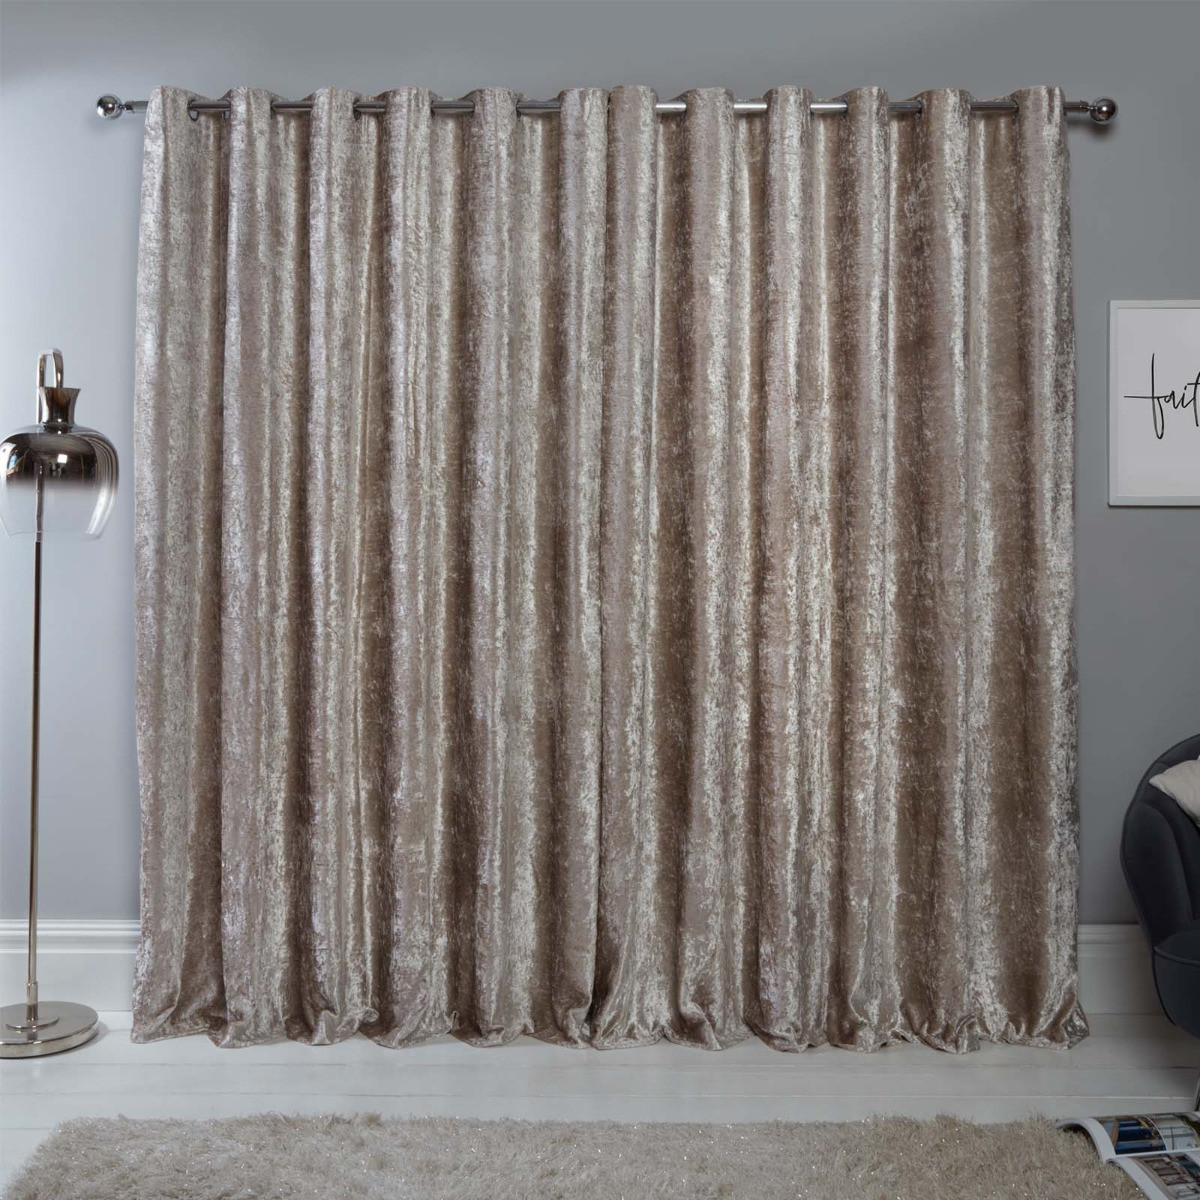 Sienna Home Crushed Velvet Eyelet Curtains - Natural Gold 90" x 72">